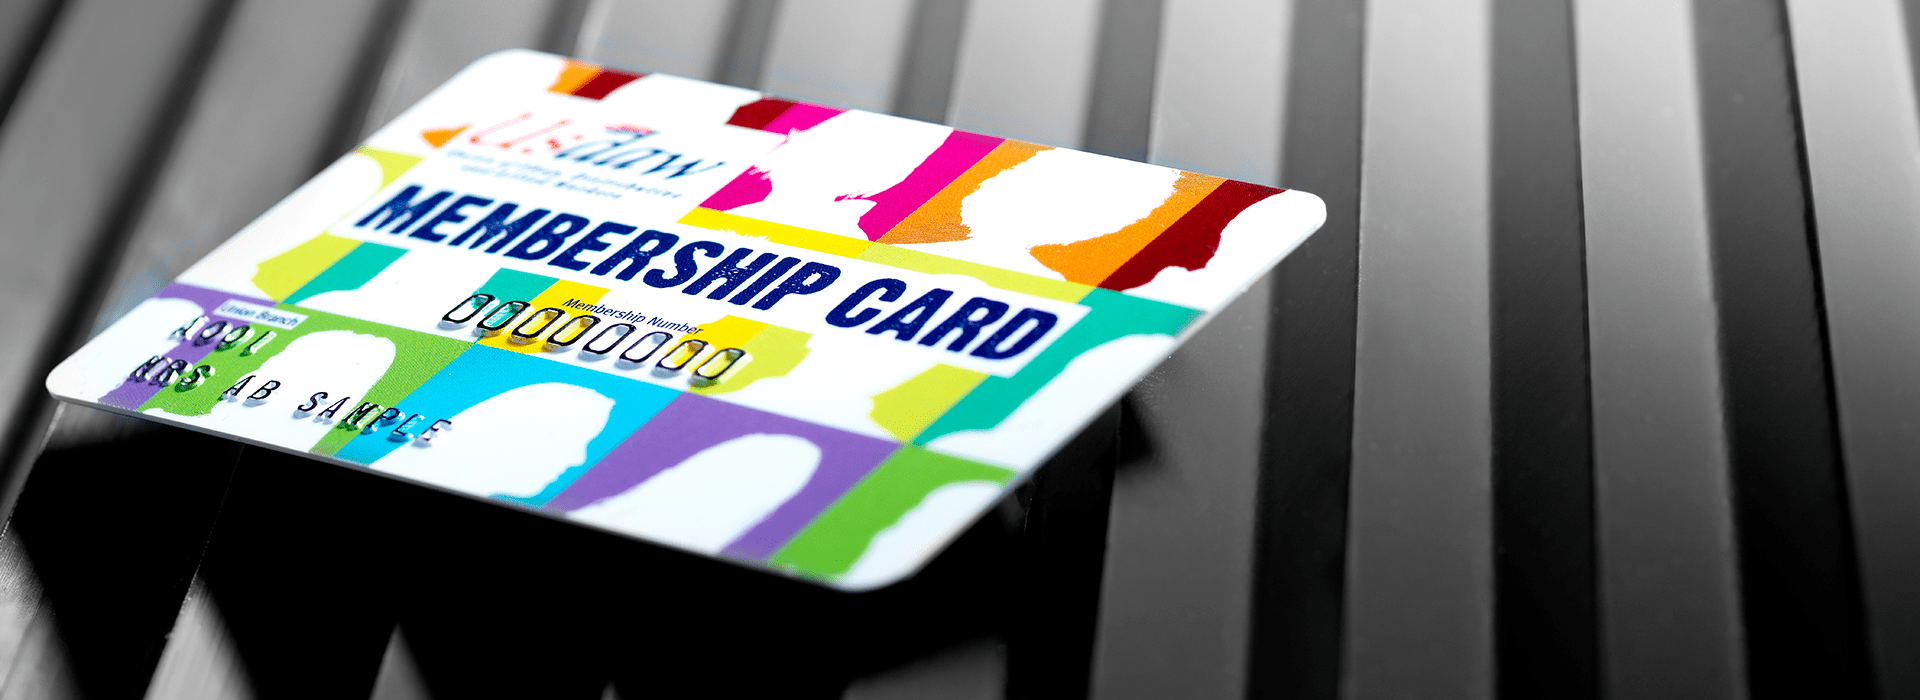 Membership card Image 